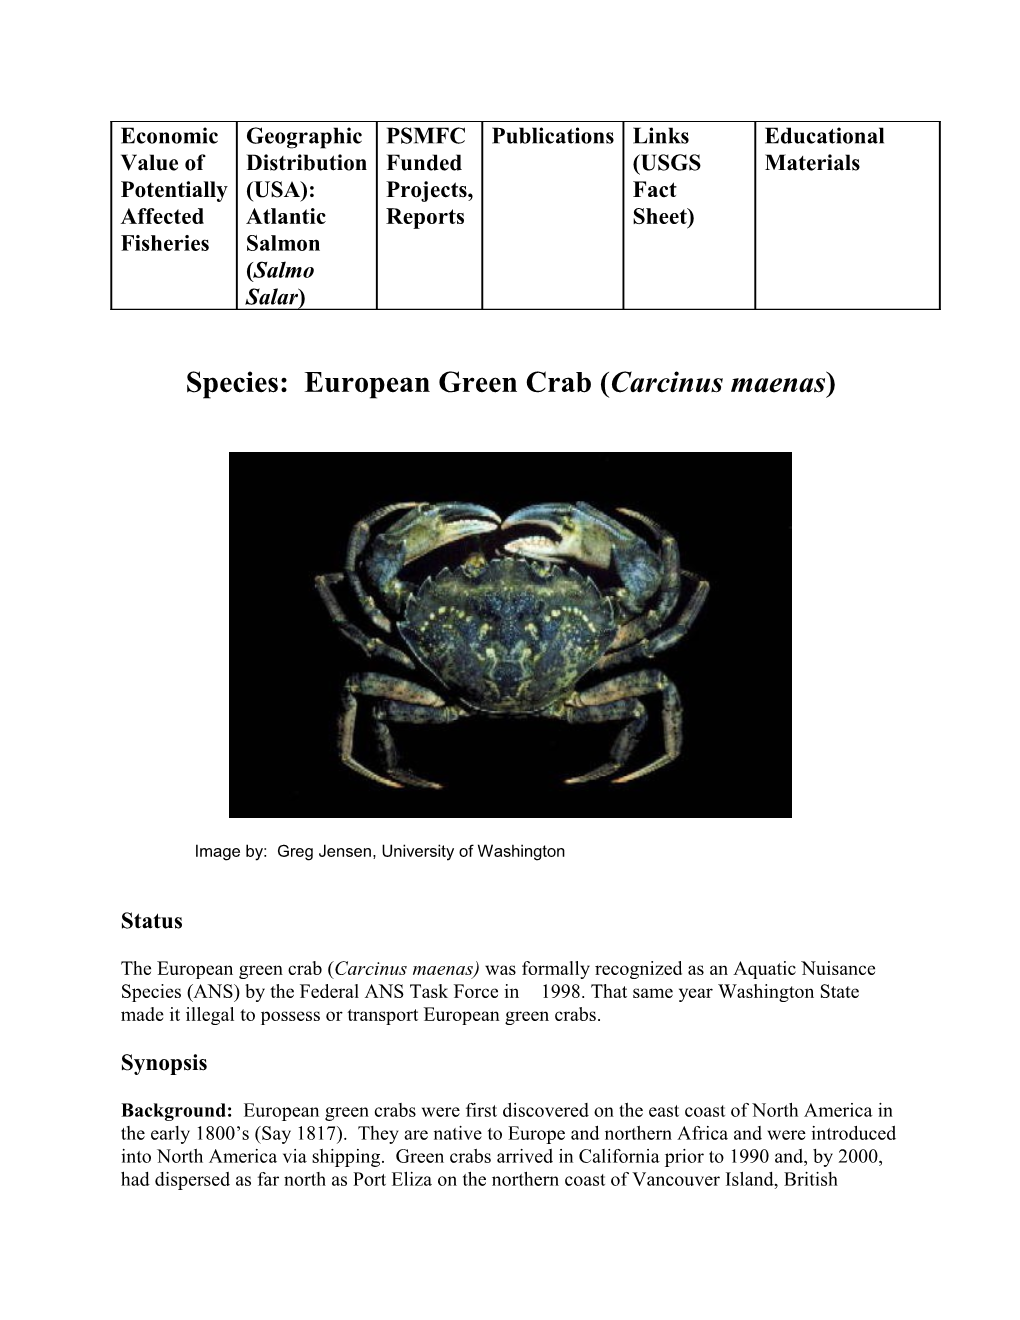 Species: Green Crab (Carcinus Maenas) (References : See Yamada)